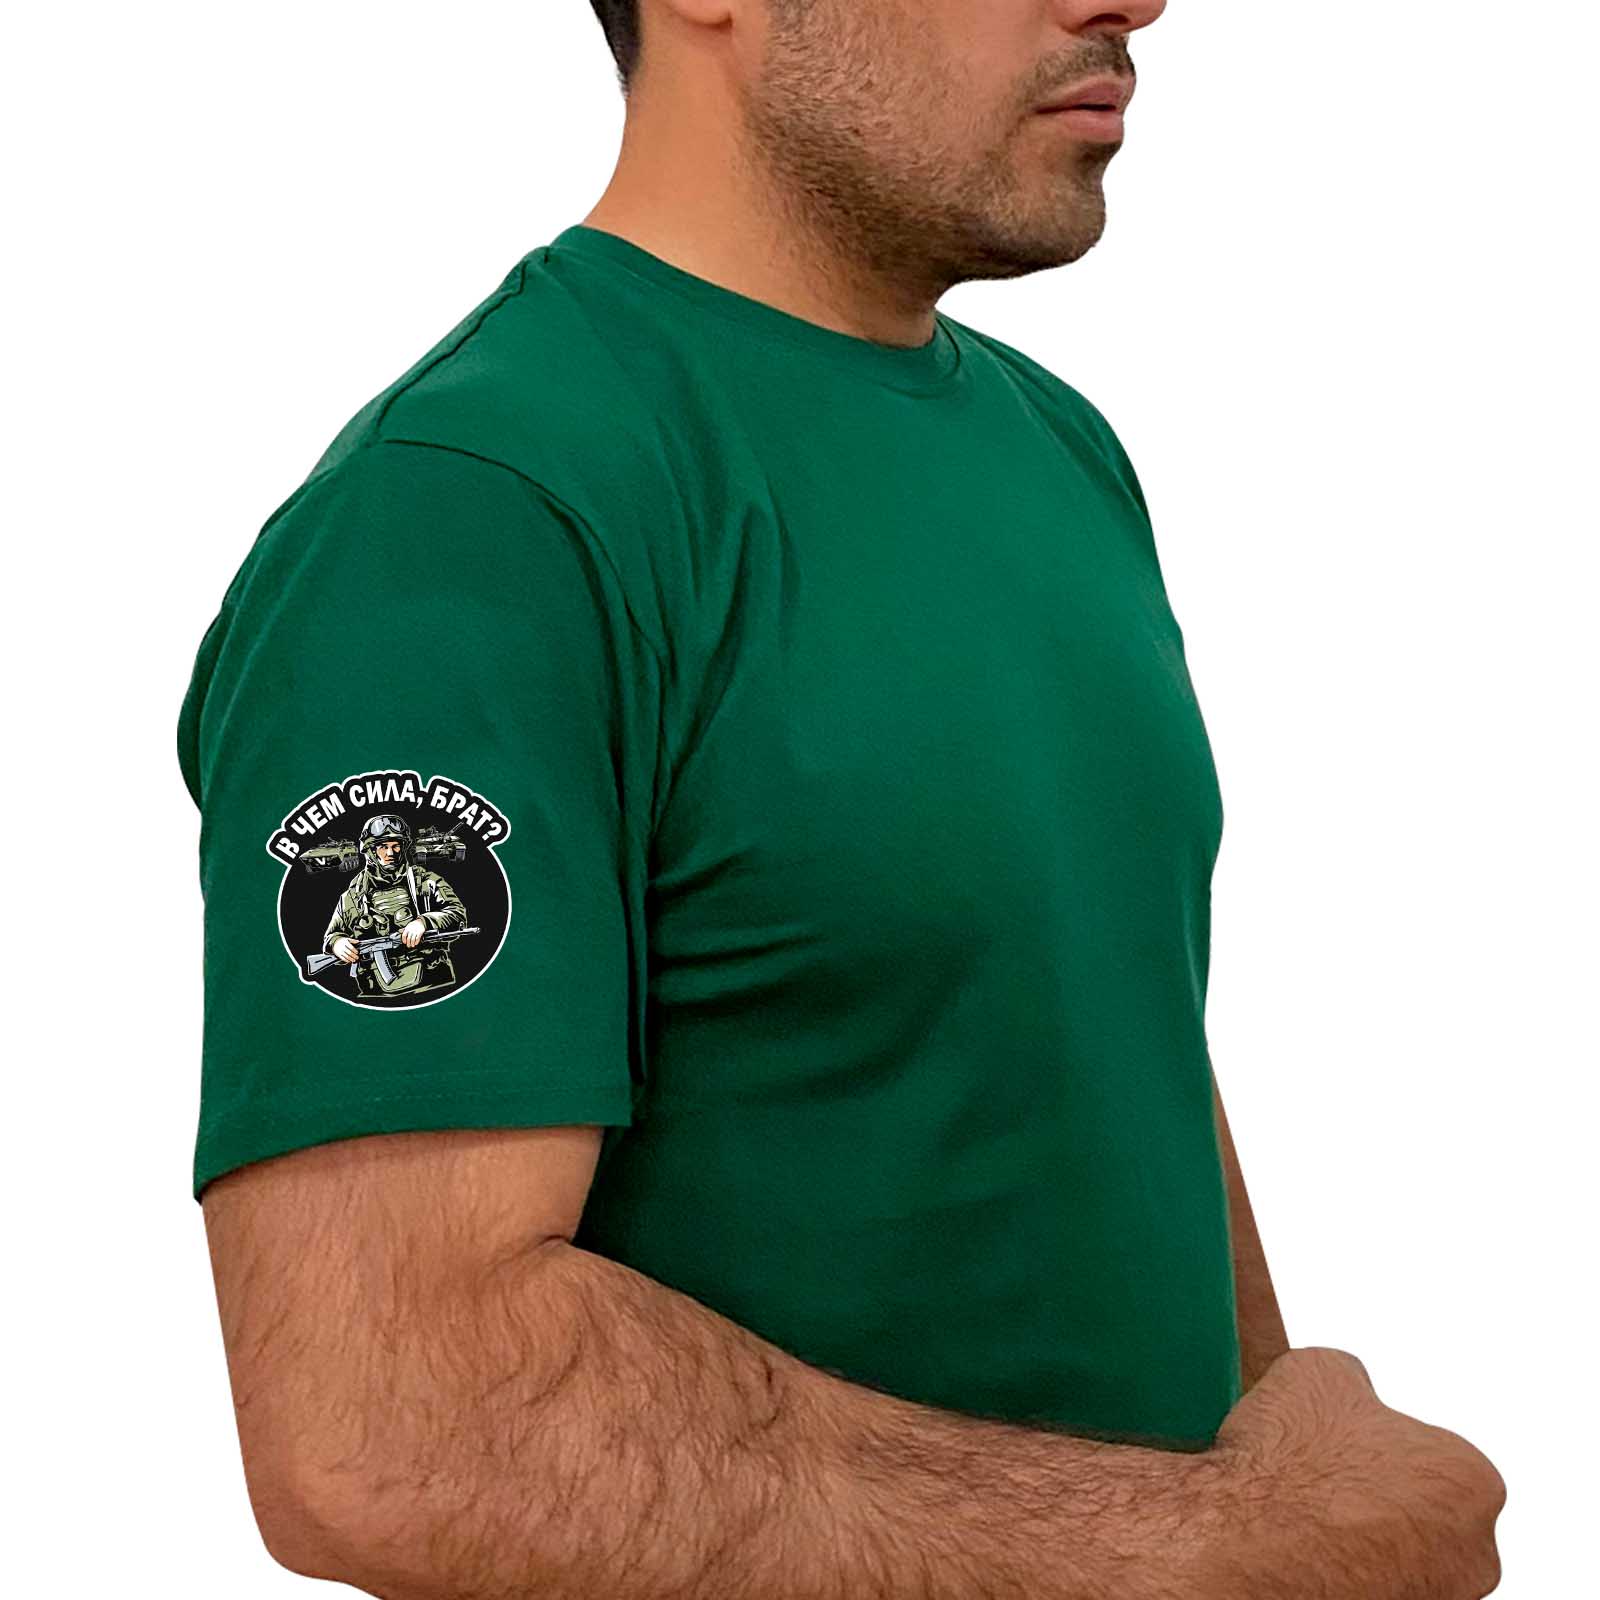 Зелёная футболка с термотрансфером "В чём сила, брат?" на рукаве